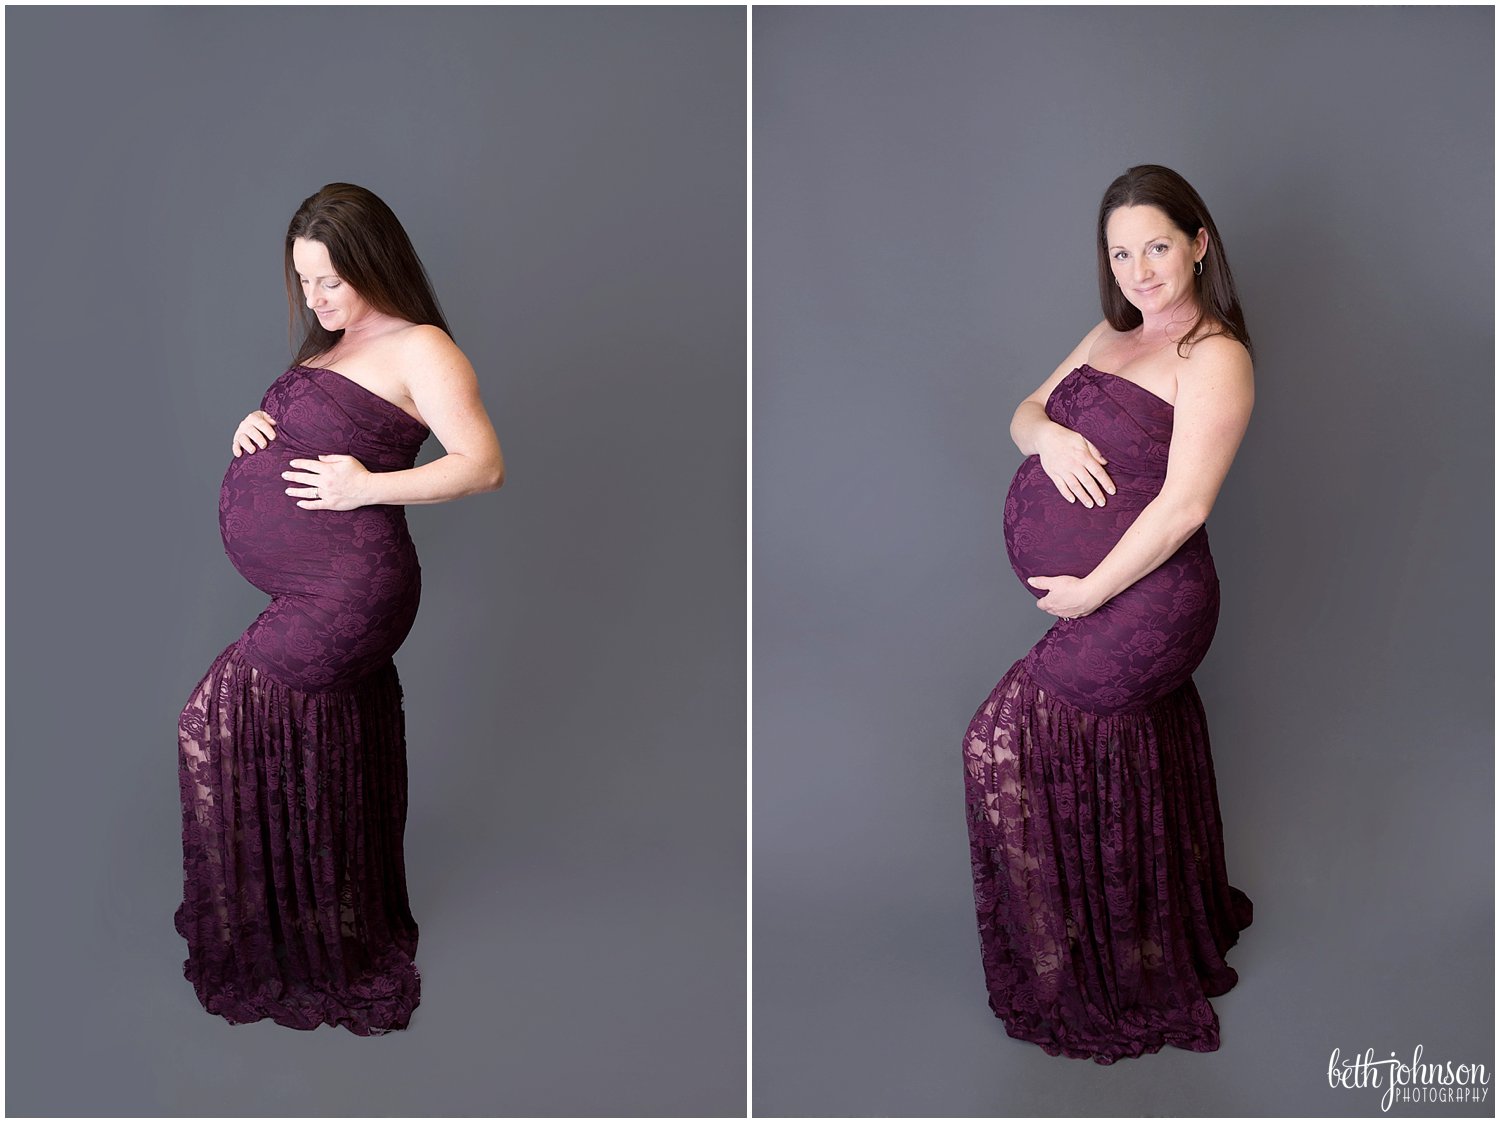 Laura | Tallahassee FL Maternity Photographer